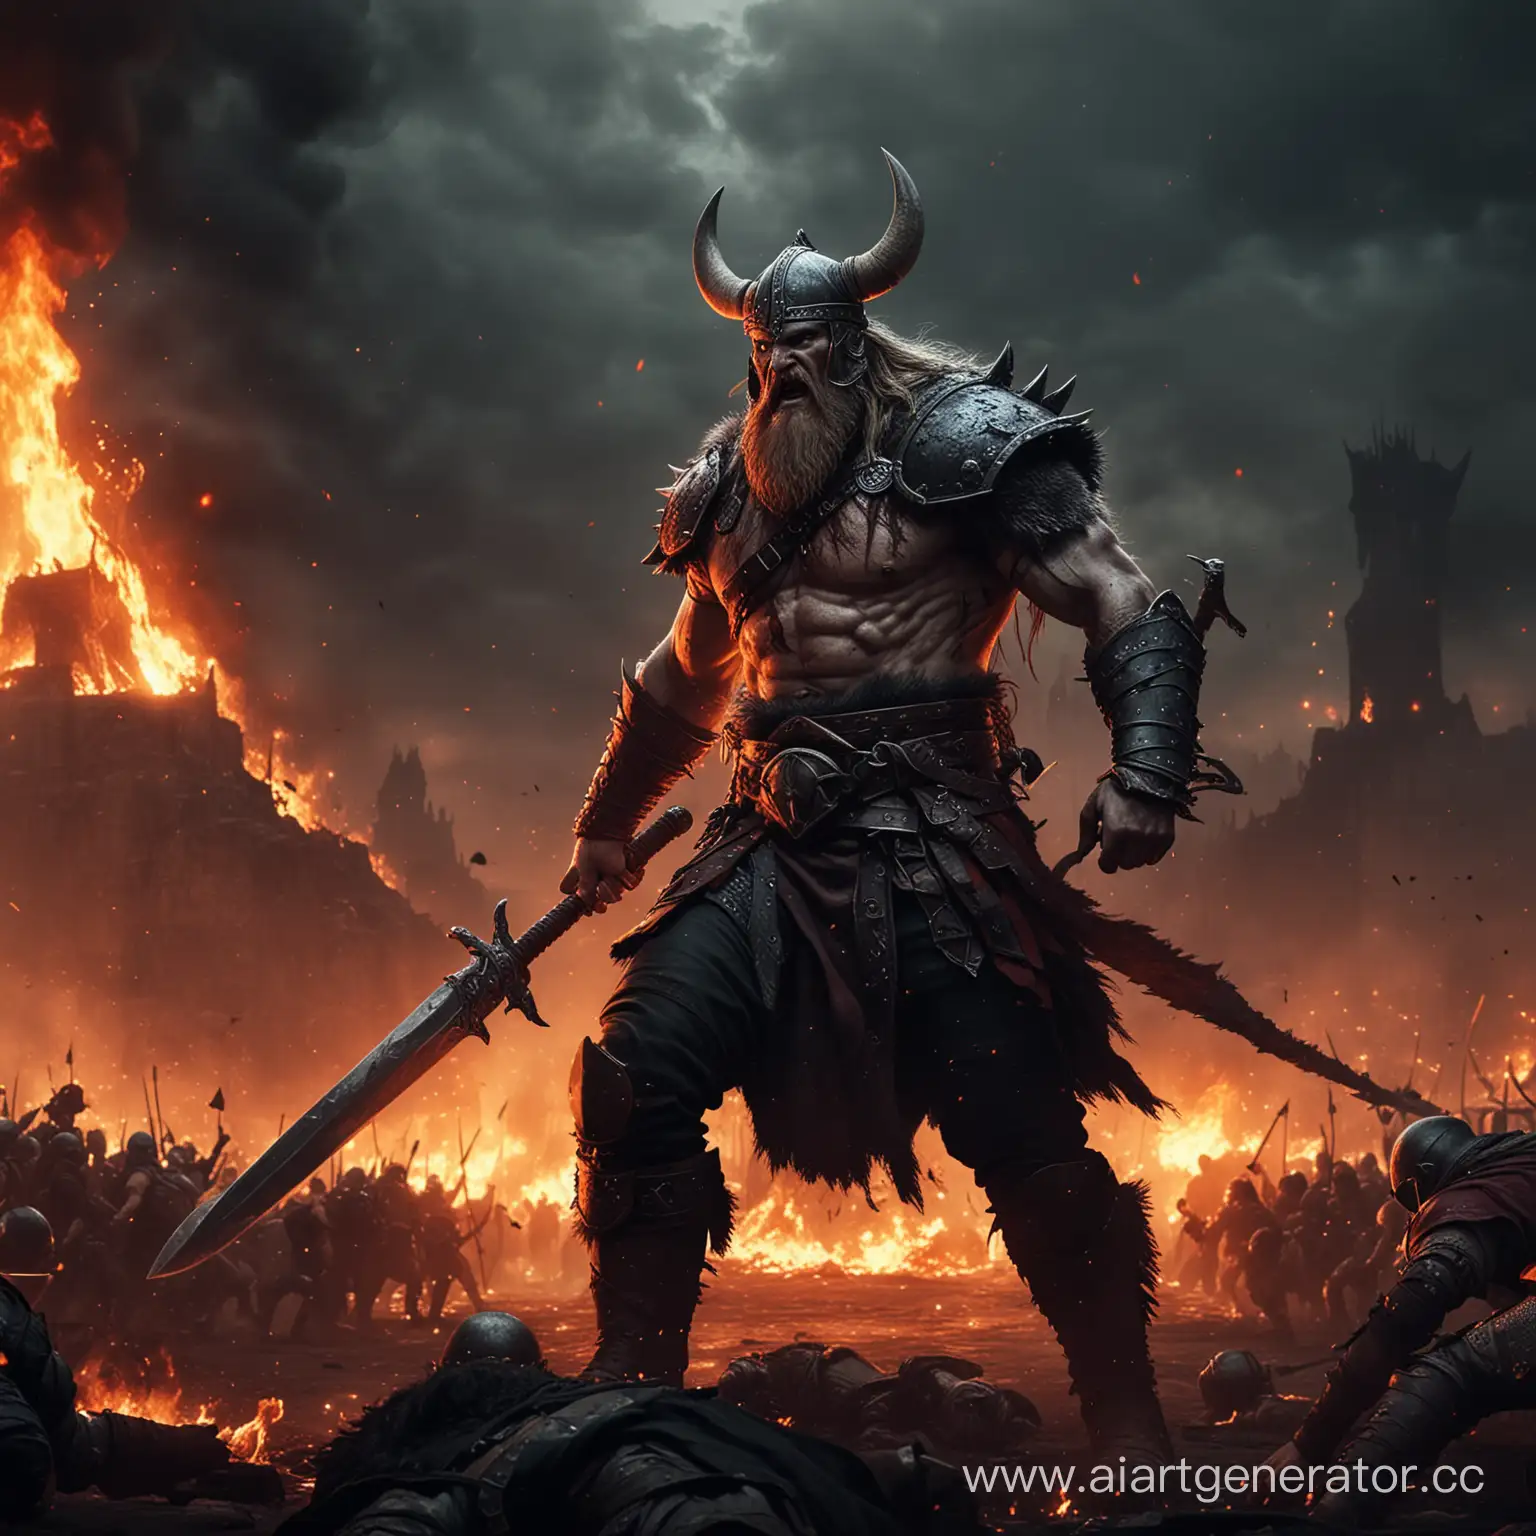 Battle viking scene, blood, flames, dark fantasy, epic